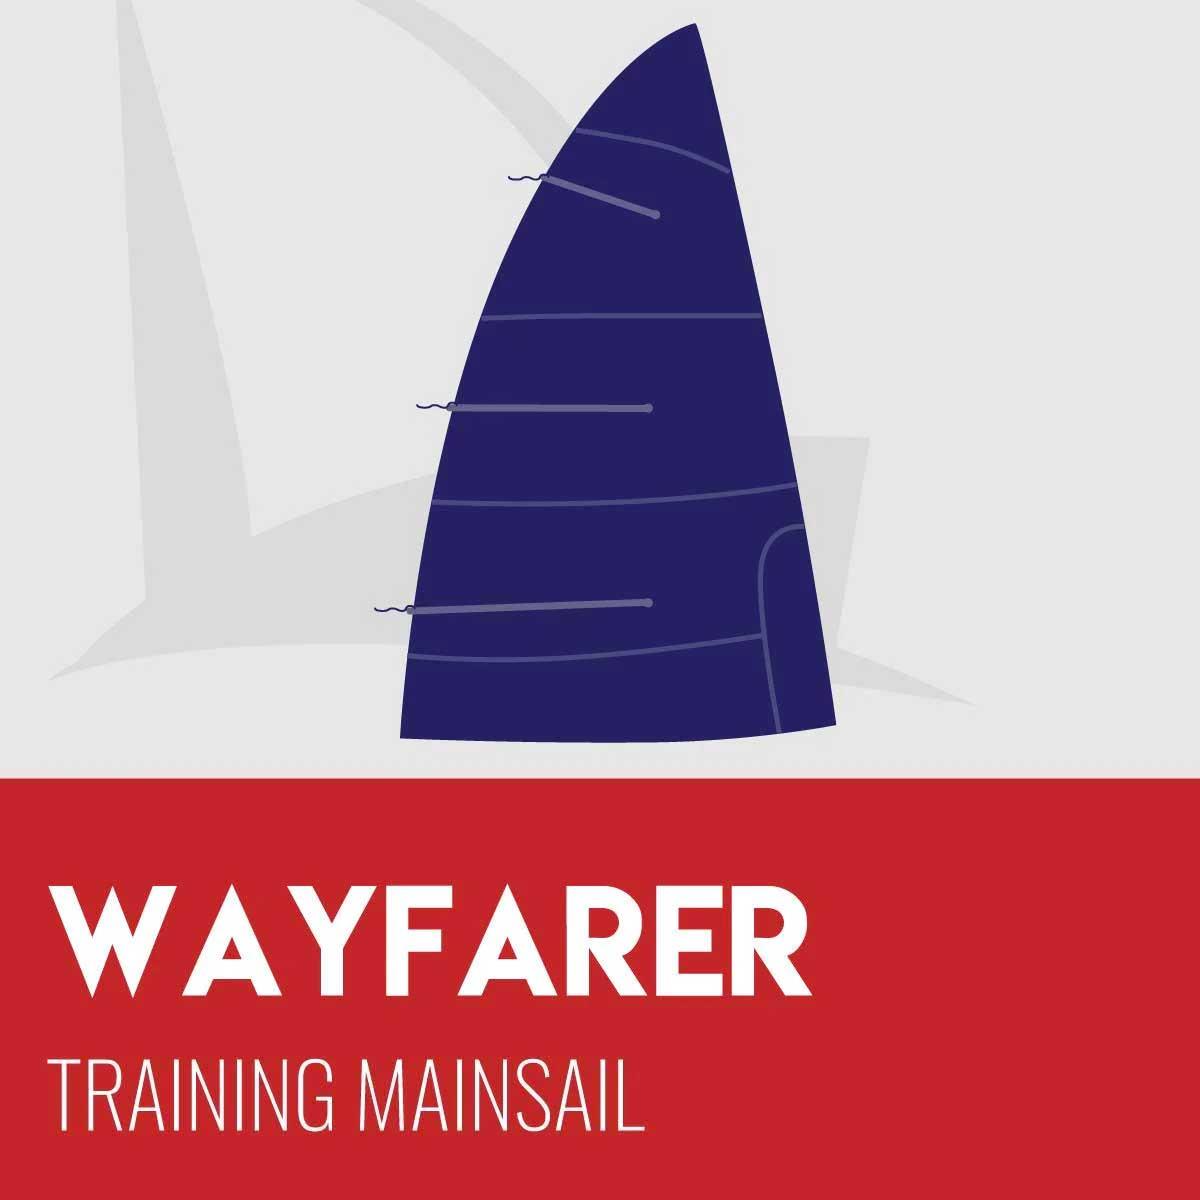 Wayfarer Training Mainsail